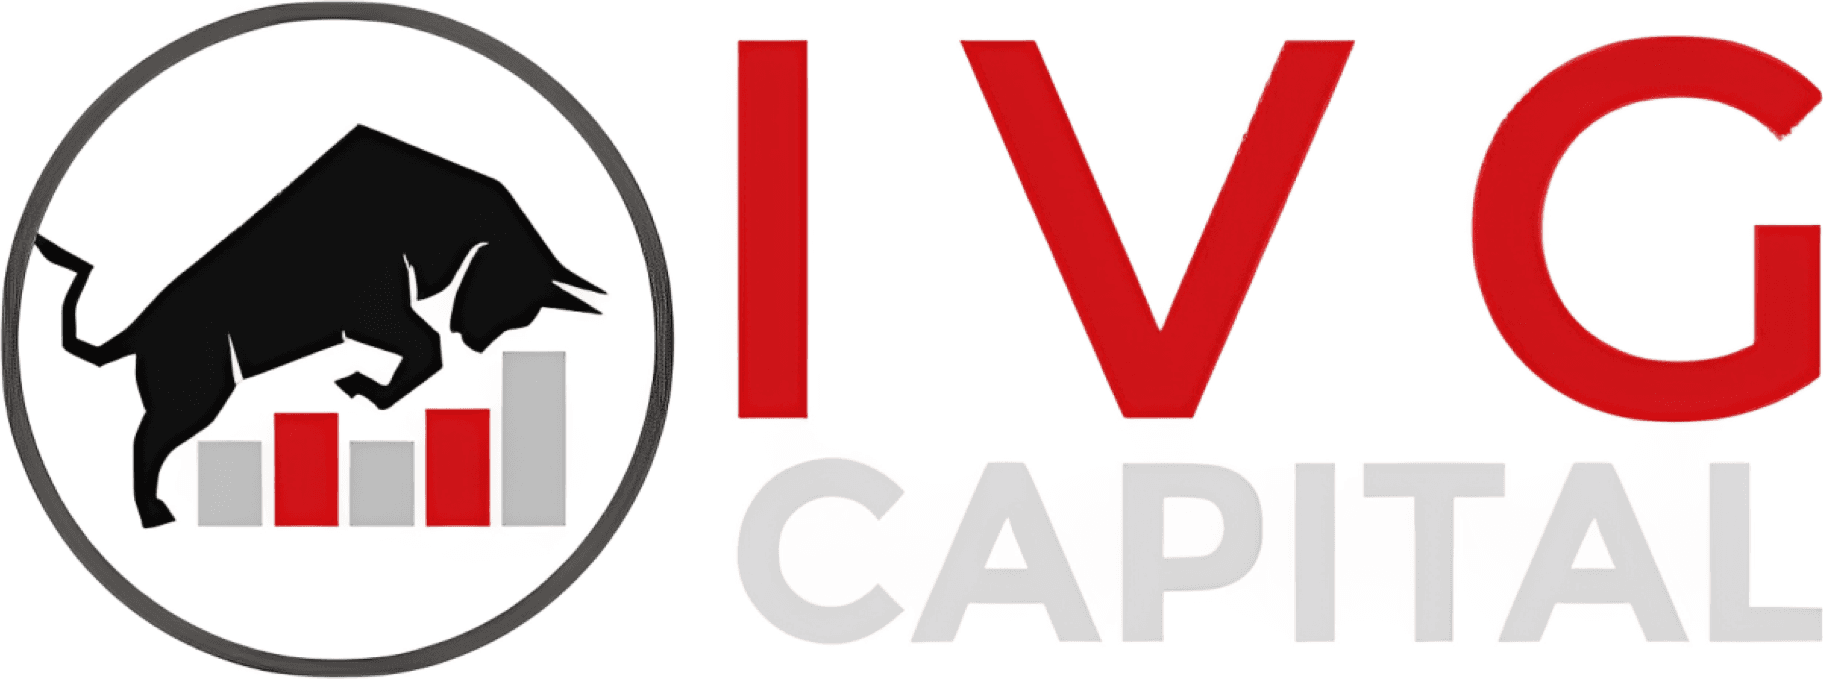 IVG Capital